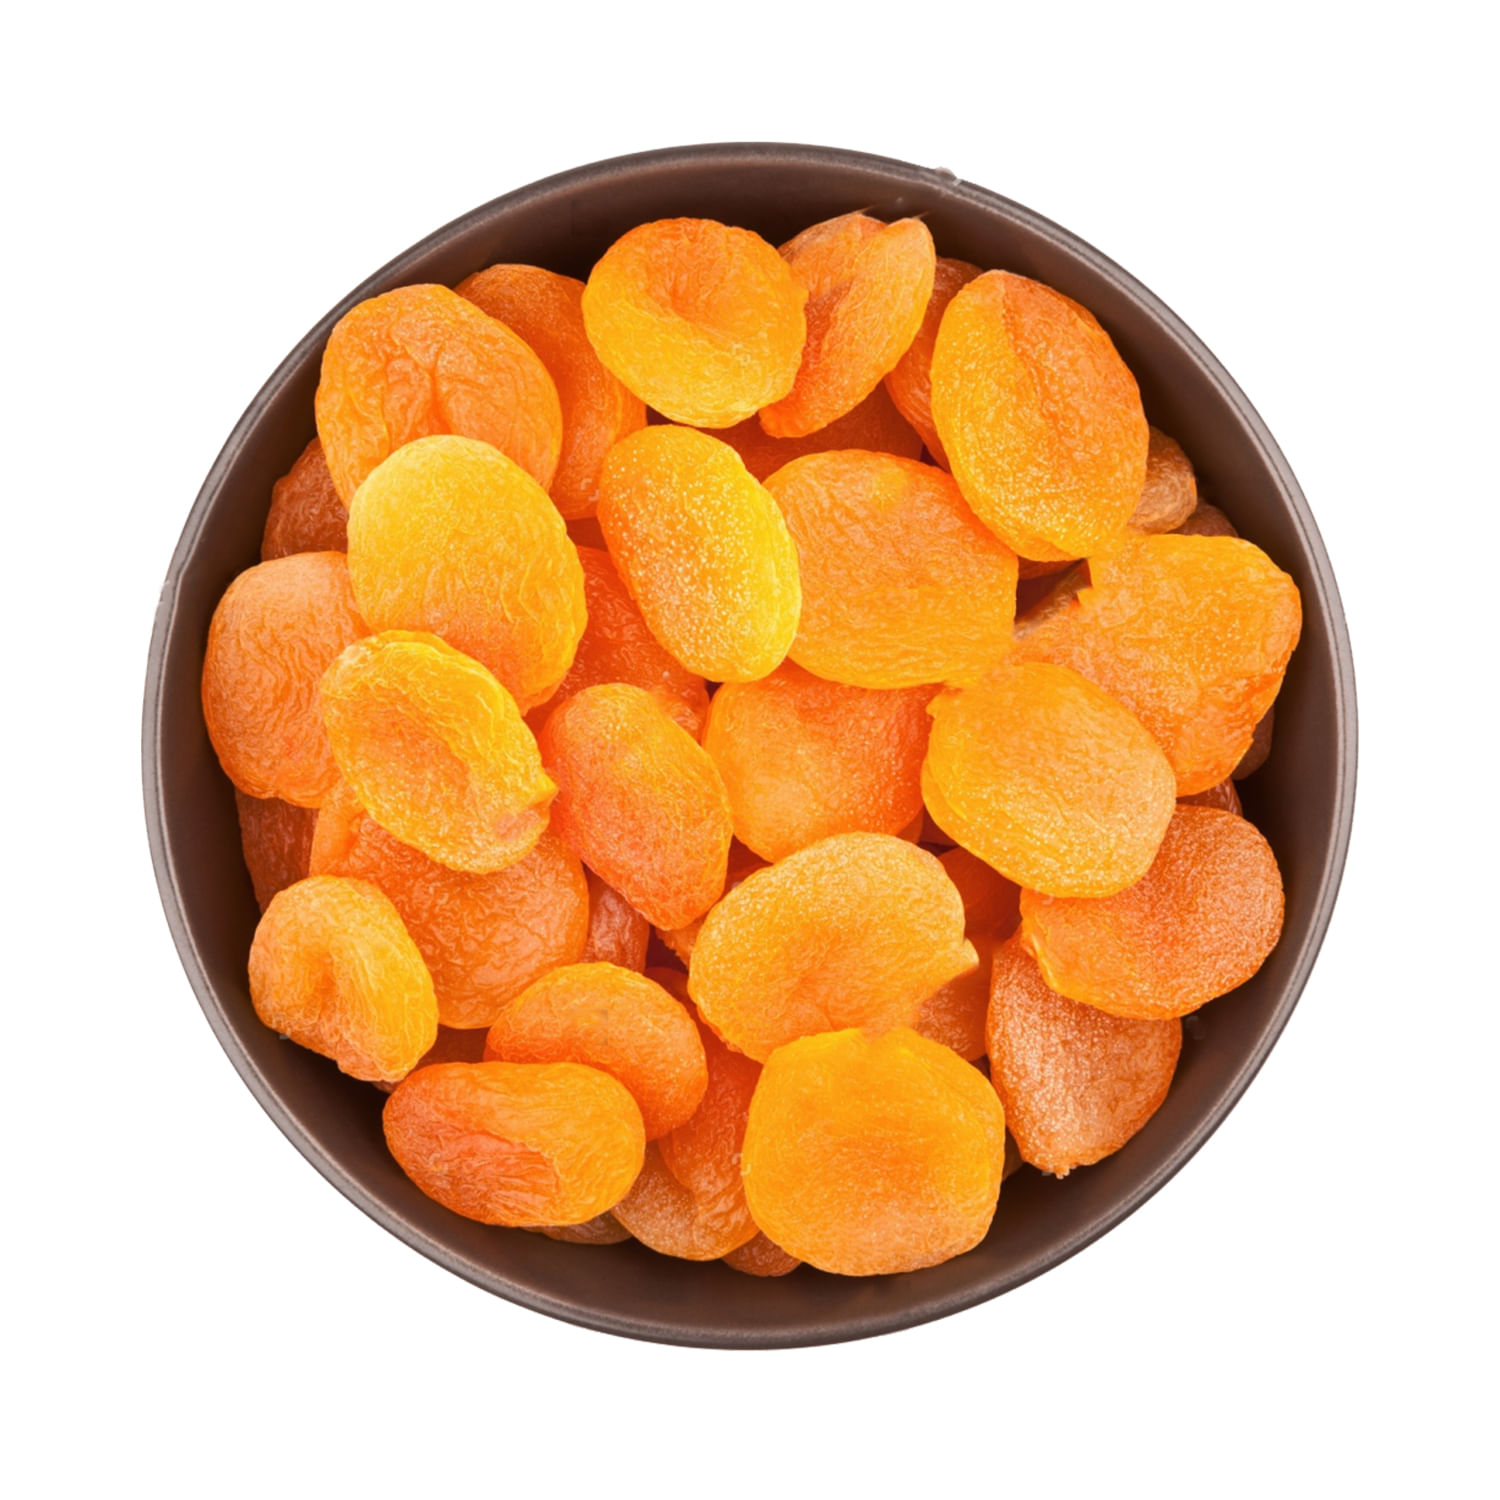 Nutraj Premium Dried Pitted Turkish Apricots 600g Tray (3 X 200g)